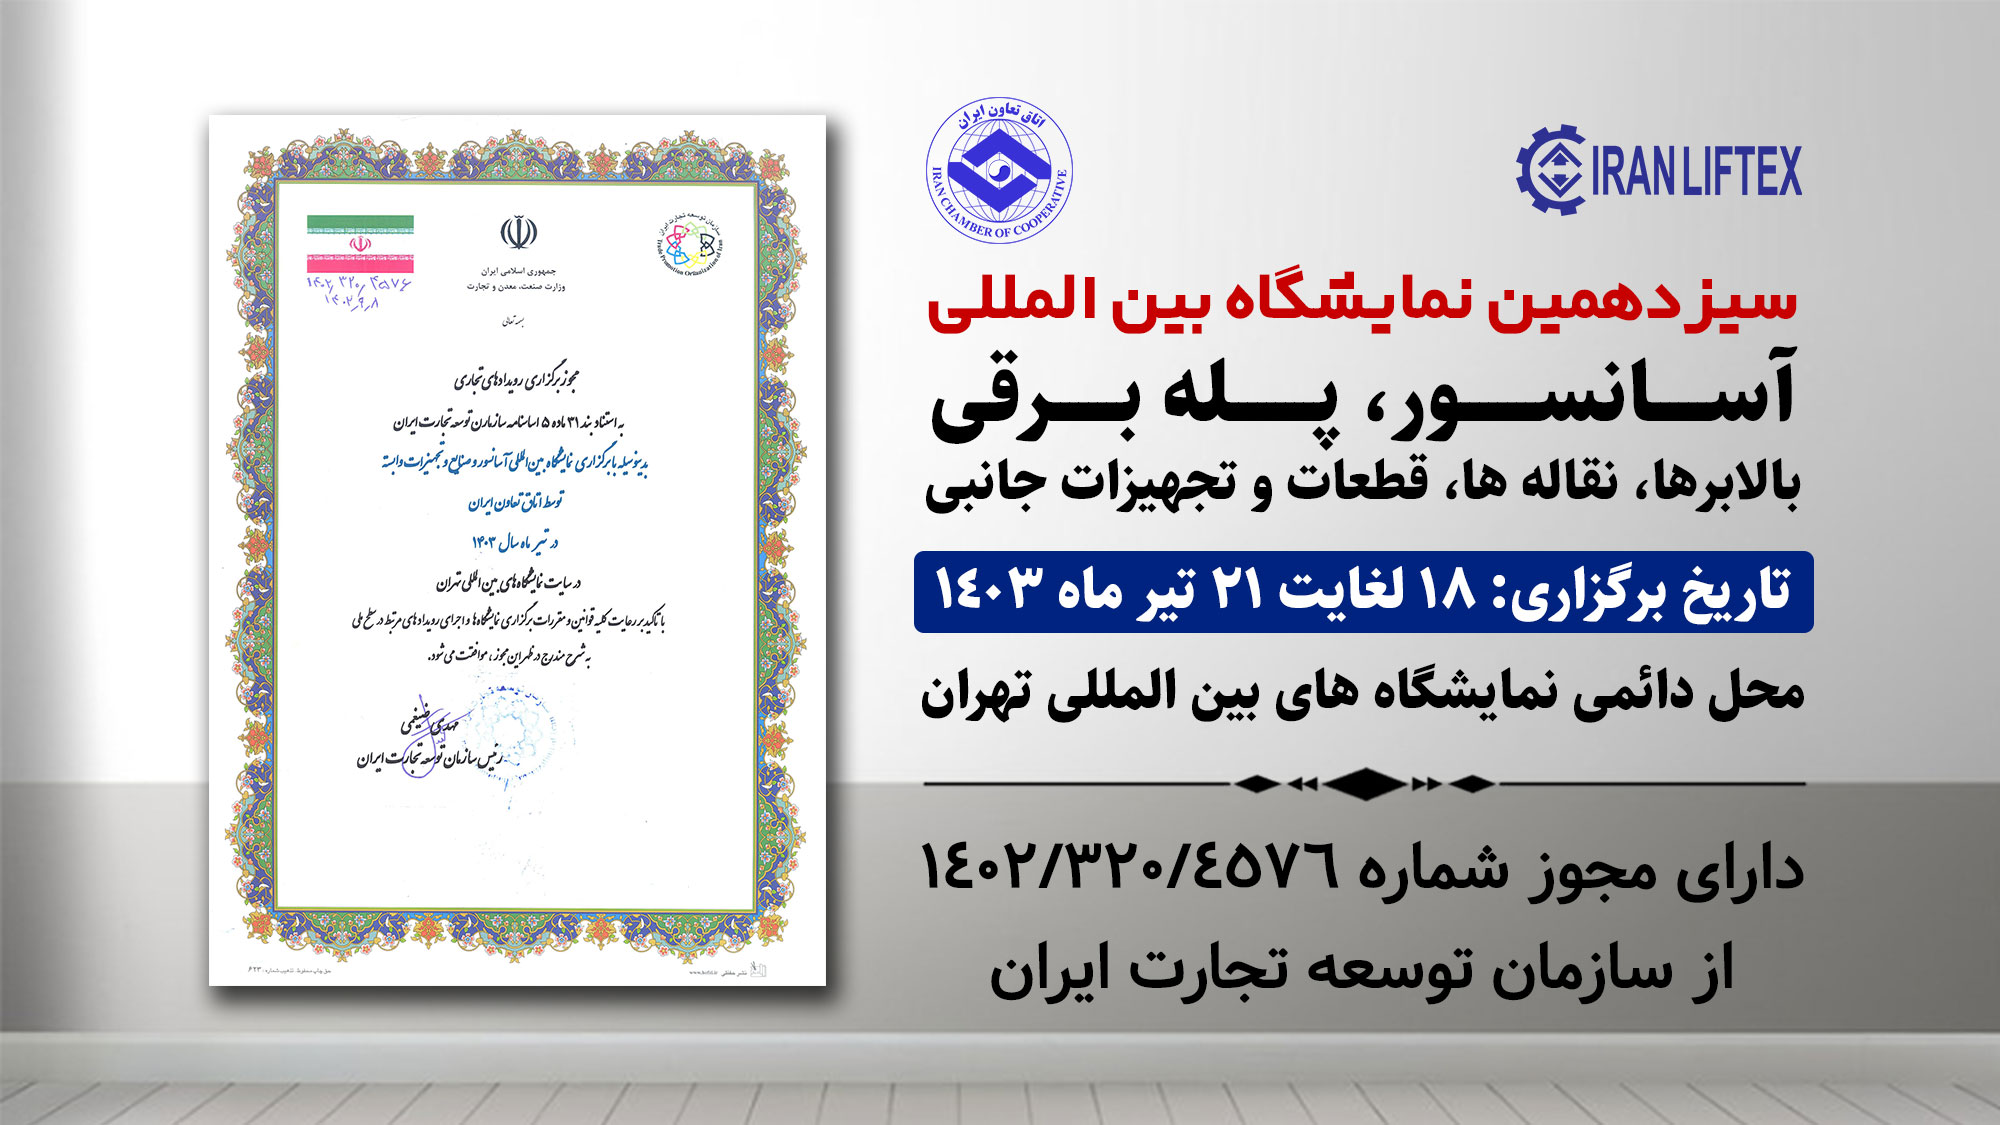 iranliftex2024 - The 13th International Elevators & Escalators Exhibition 2024 in Iran/Tehran